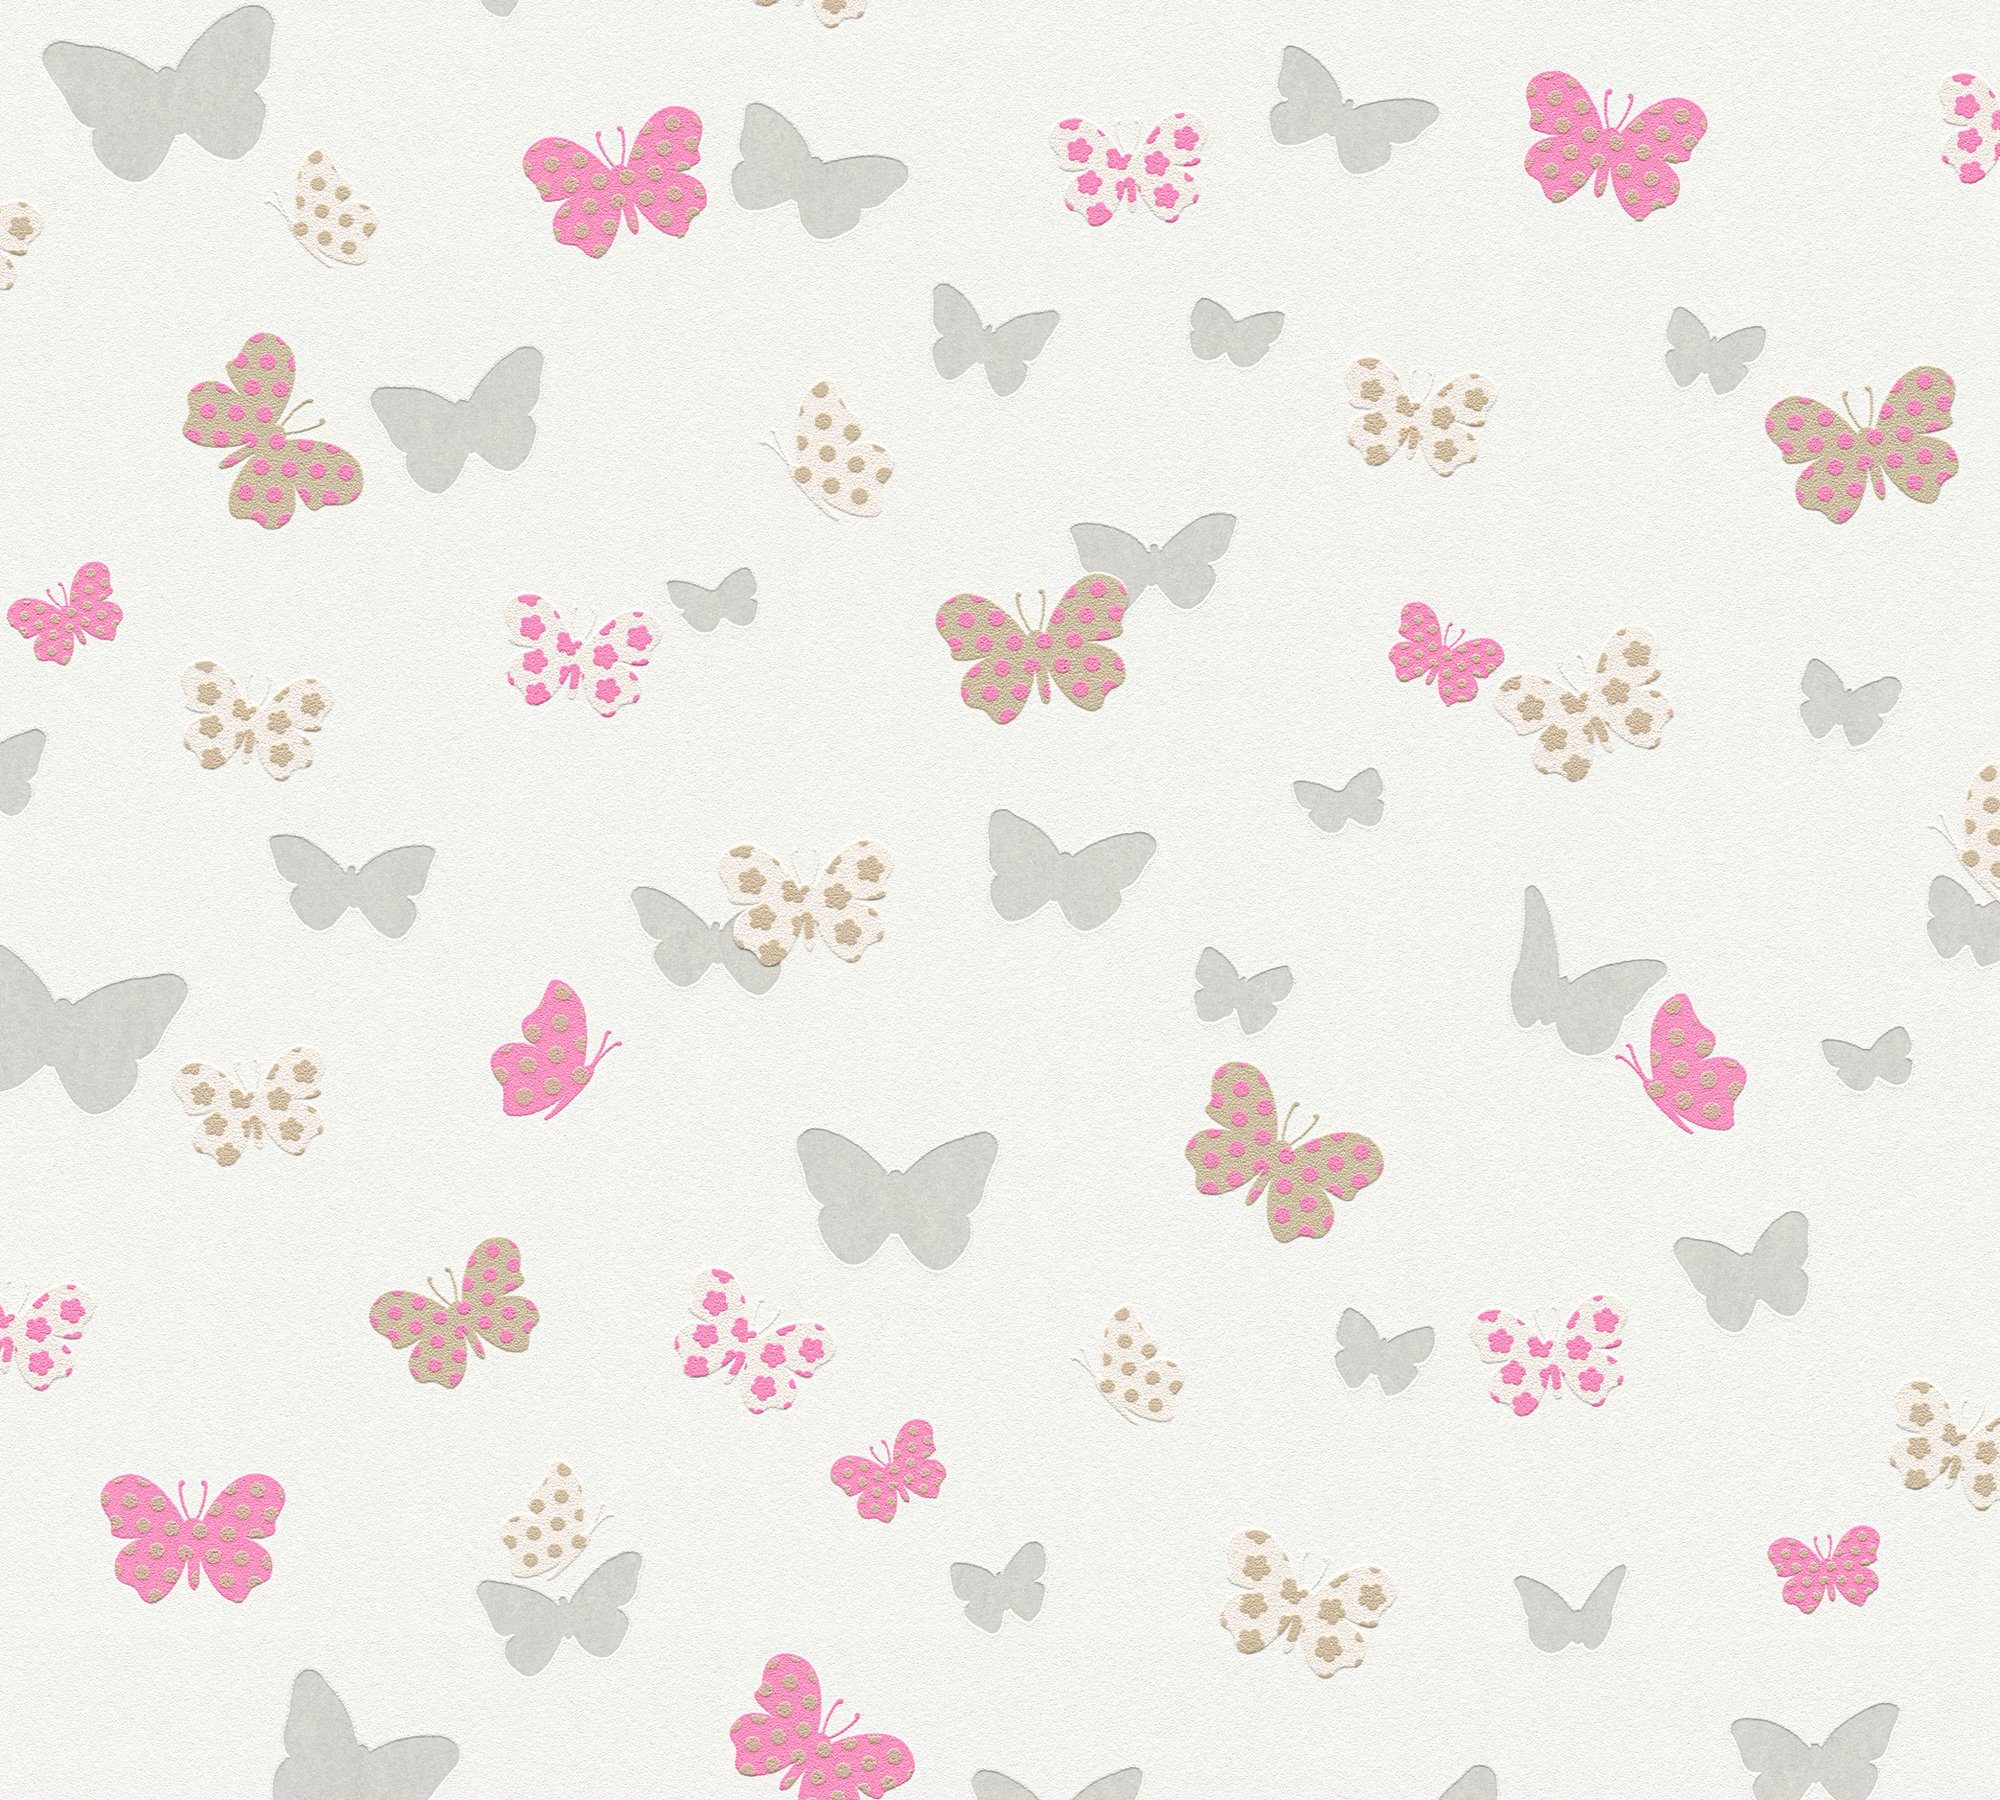 Vliestapete Création Attractive, weiß/grau/rosa Kinderzimmer A.S. Tapete Schmetterling